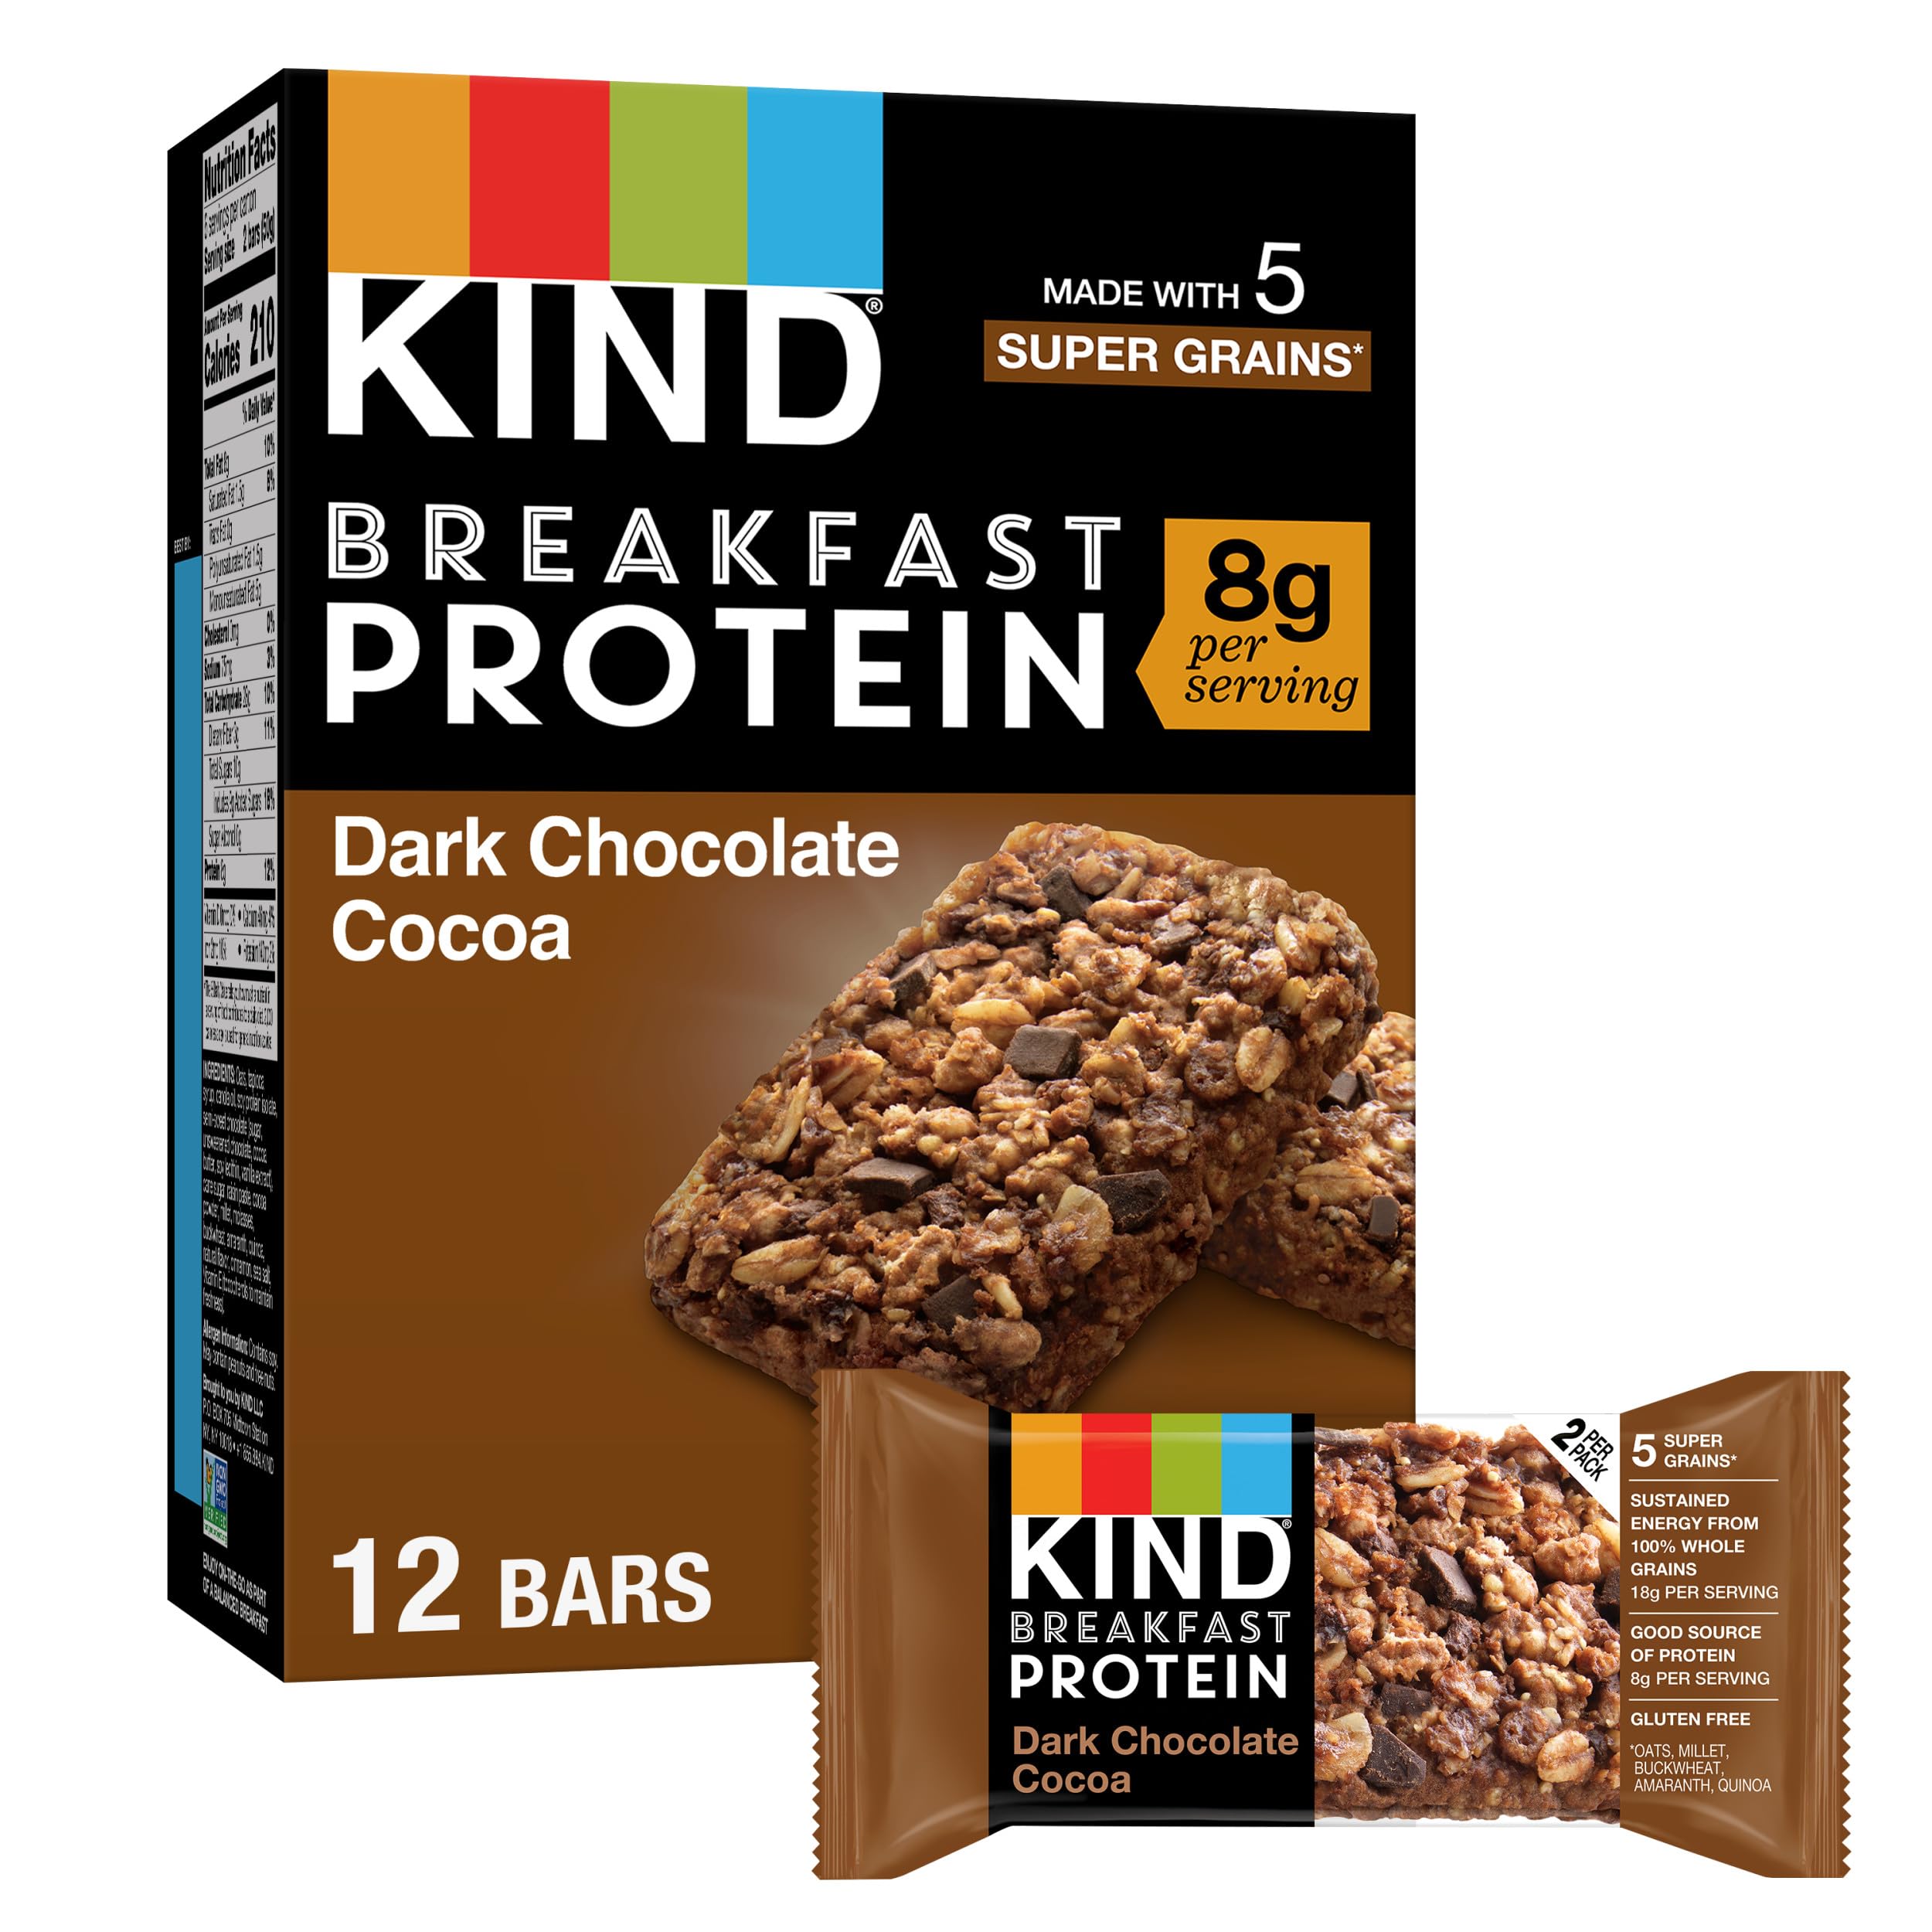 KIND Granola Bars: 6-Ct 1.76-Oz Peanut Butter or Dark Chocolate Cocoa Bars $3.50 & More w/ Subscribe & Save